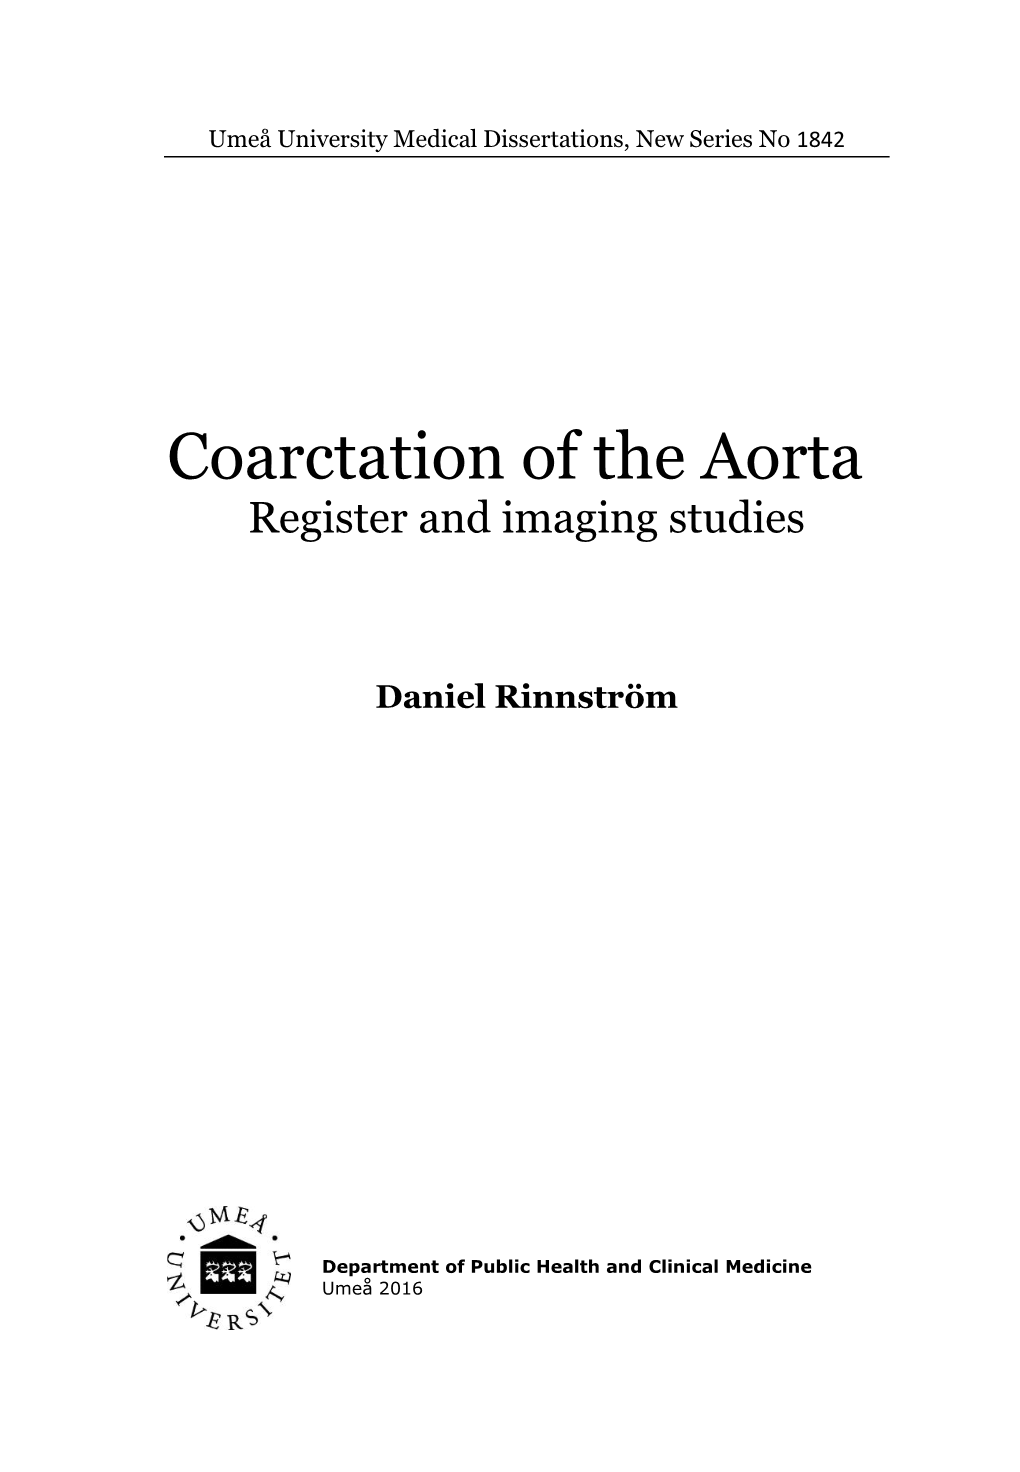 Coarctation of the Aorta Register and Imaging Studies